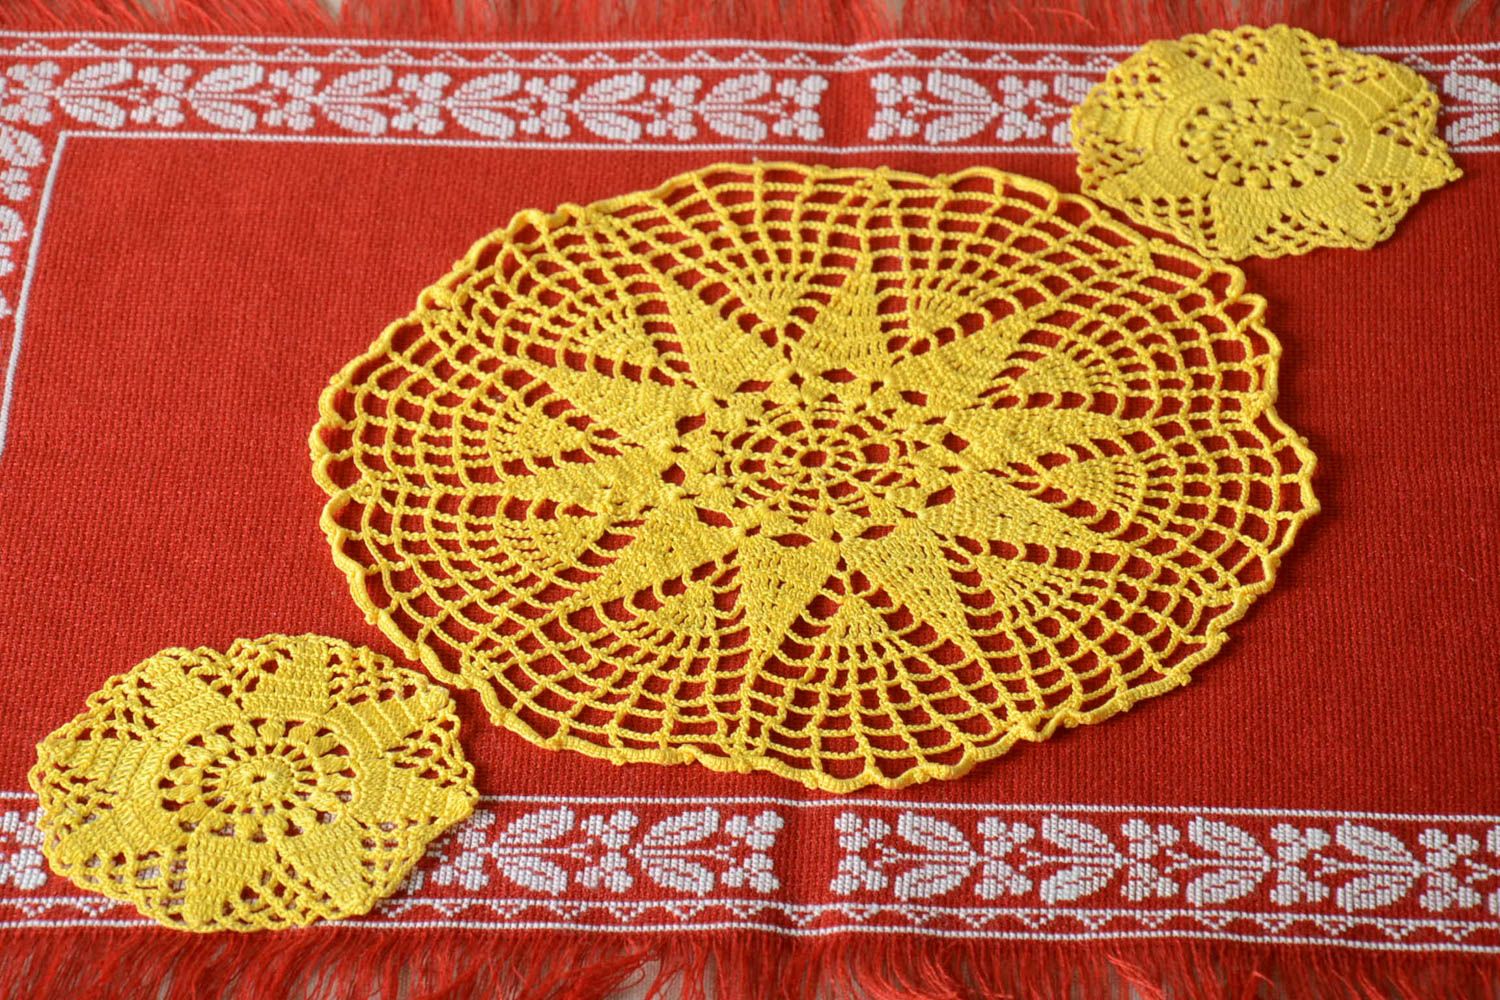 Crocheted napkins lace handmade napkins home decor ideas table napkins photo 1